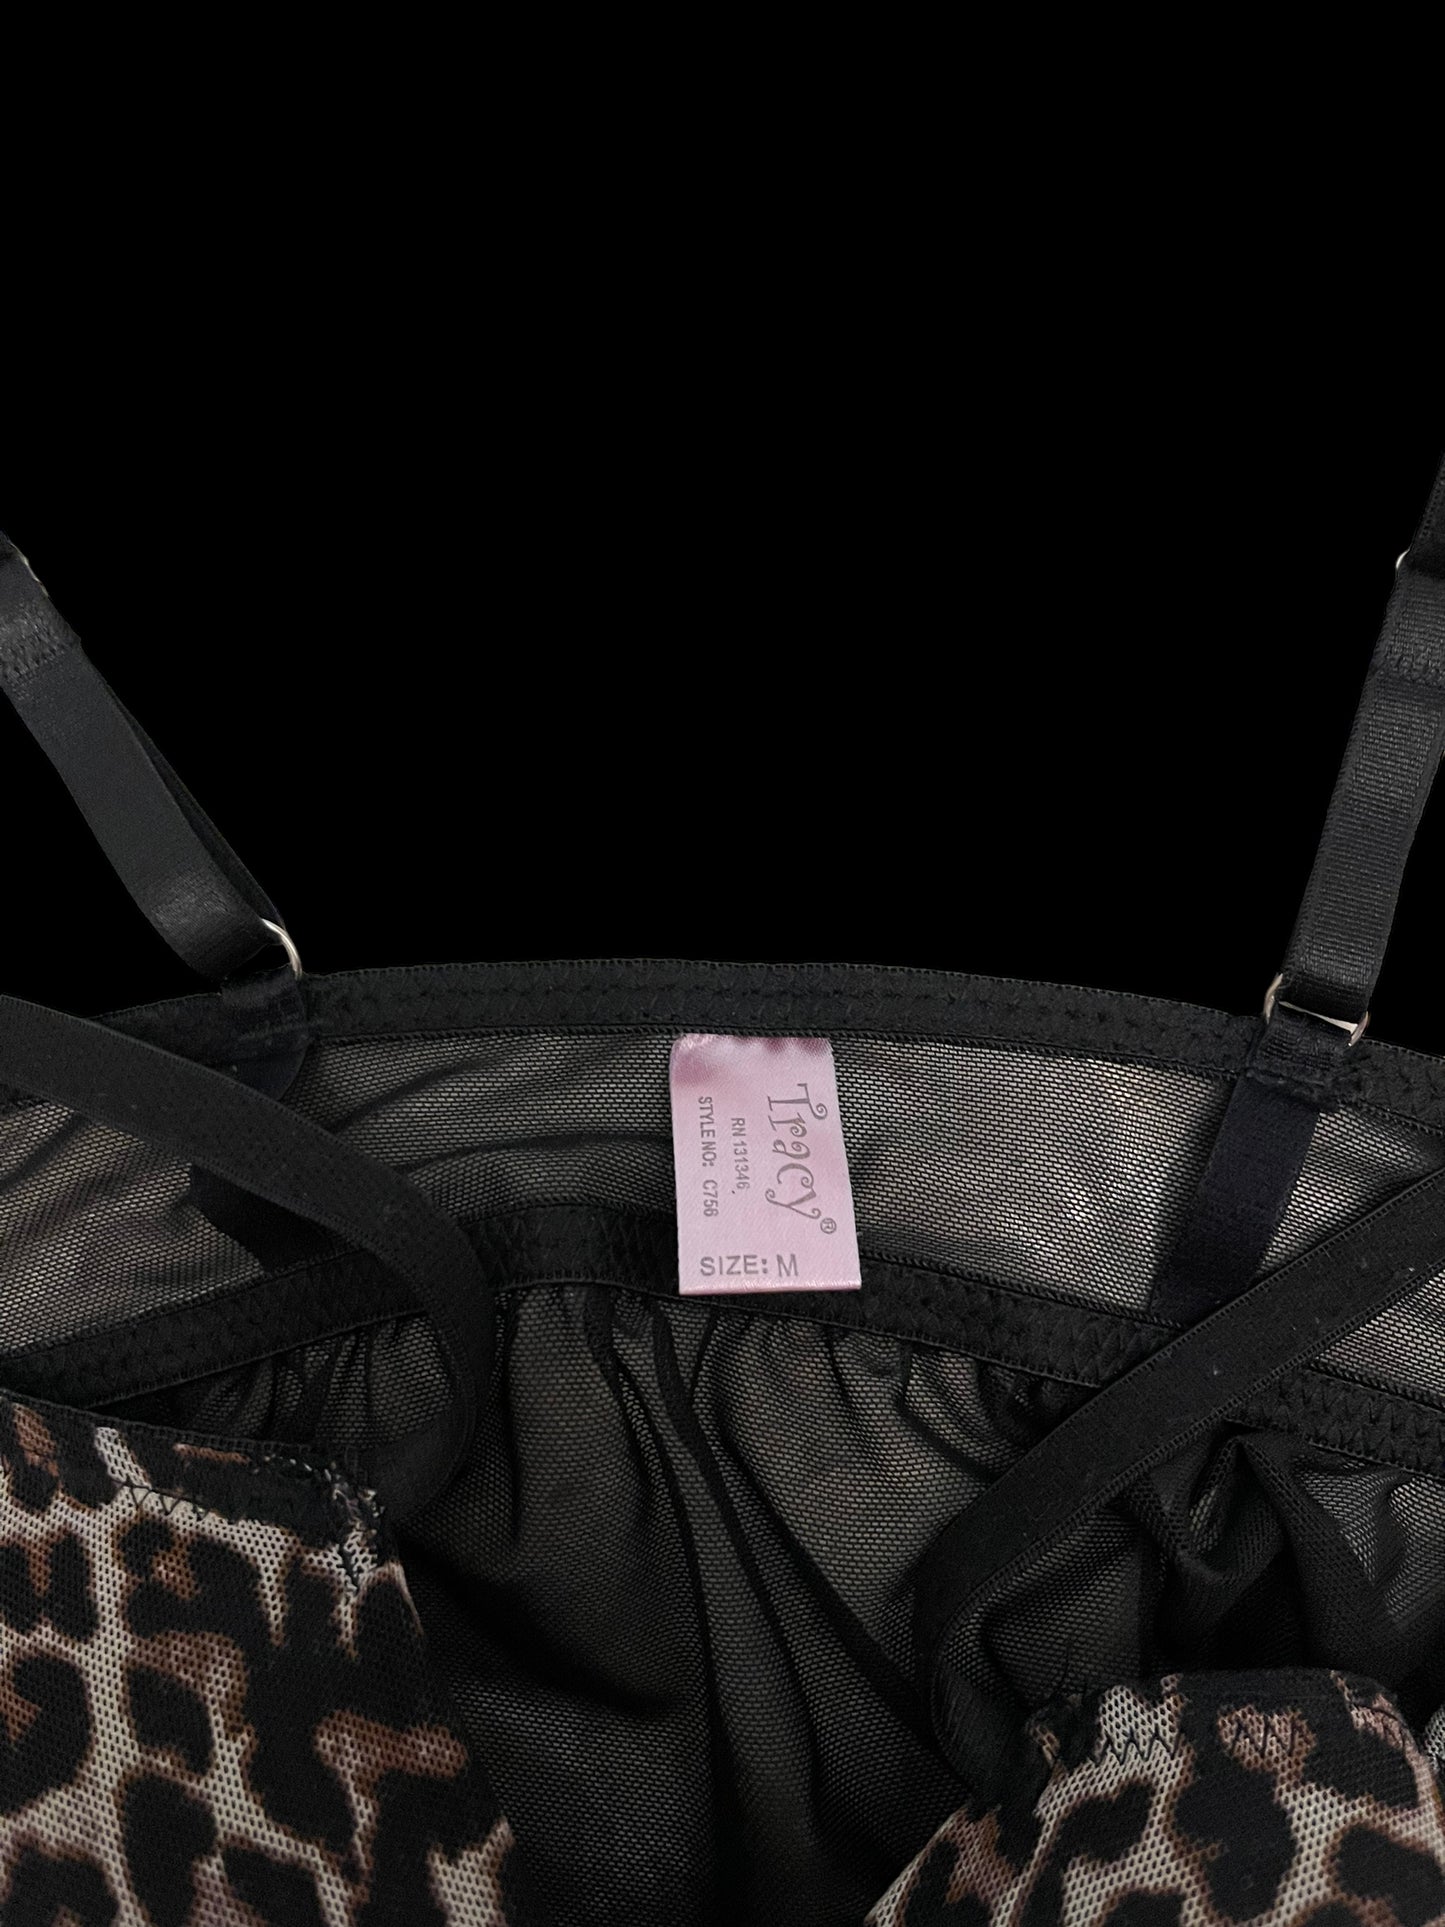 Cheetah print babydoll lingerie top